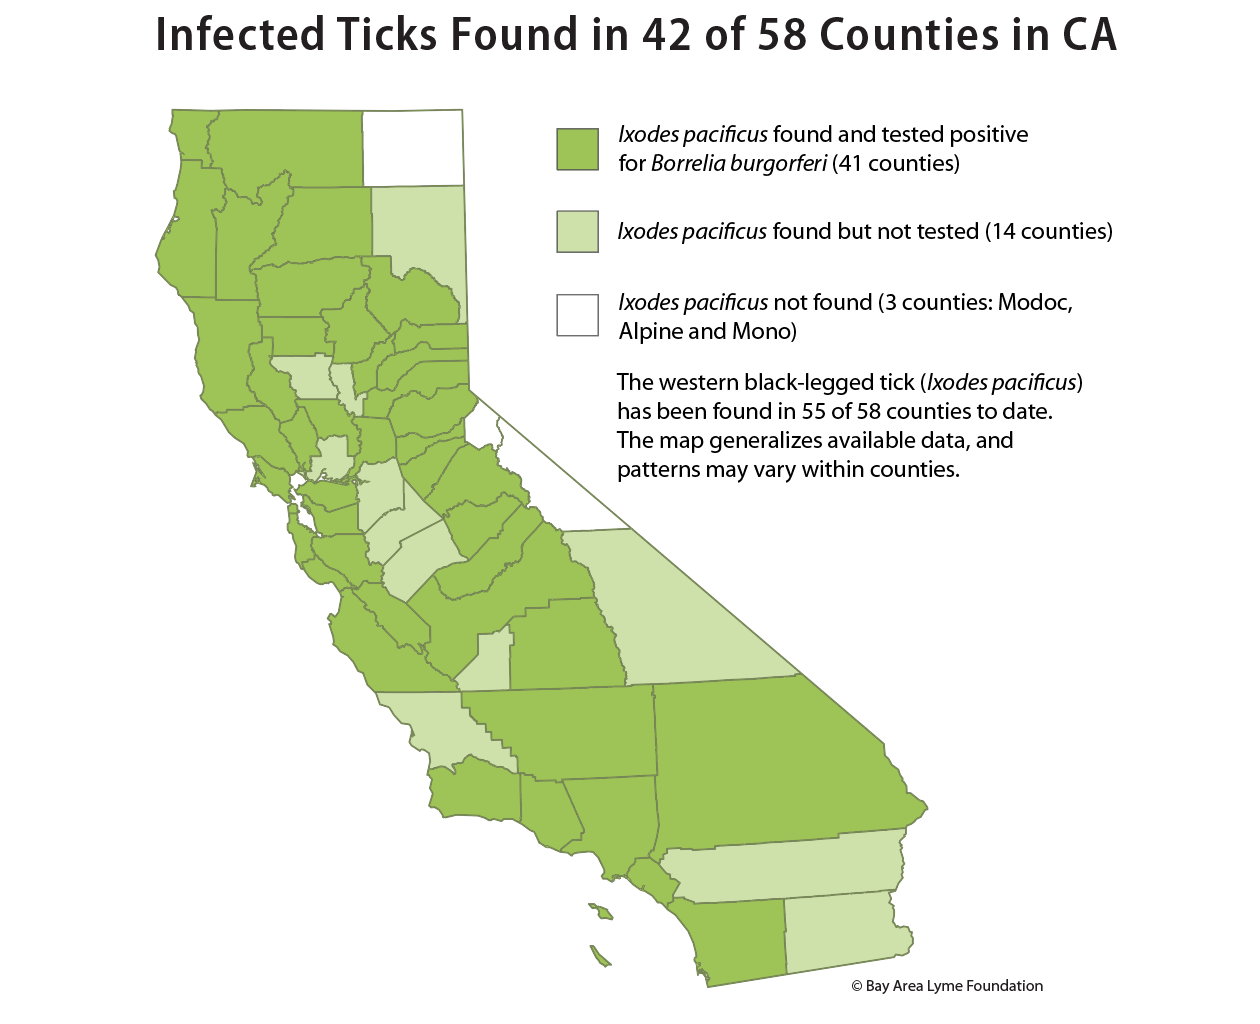 Infected ticks in CA counties